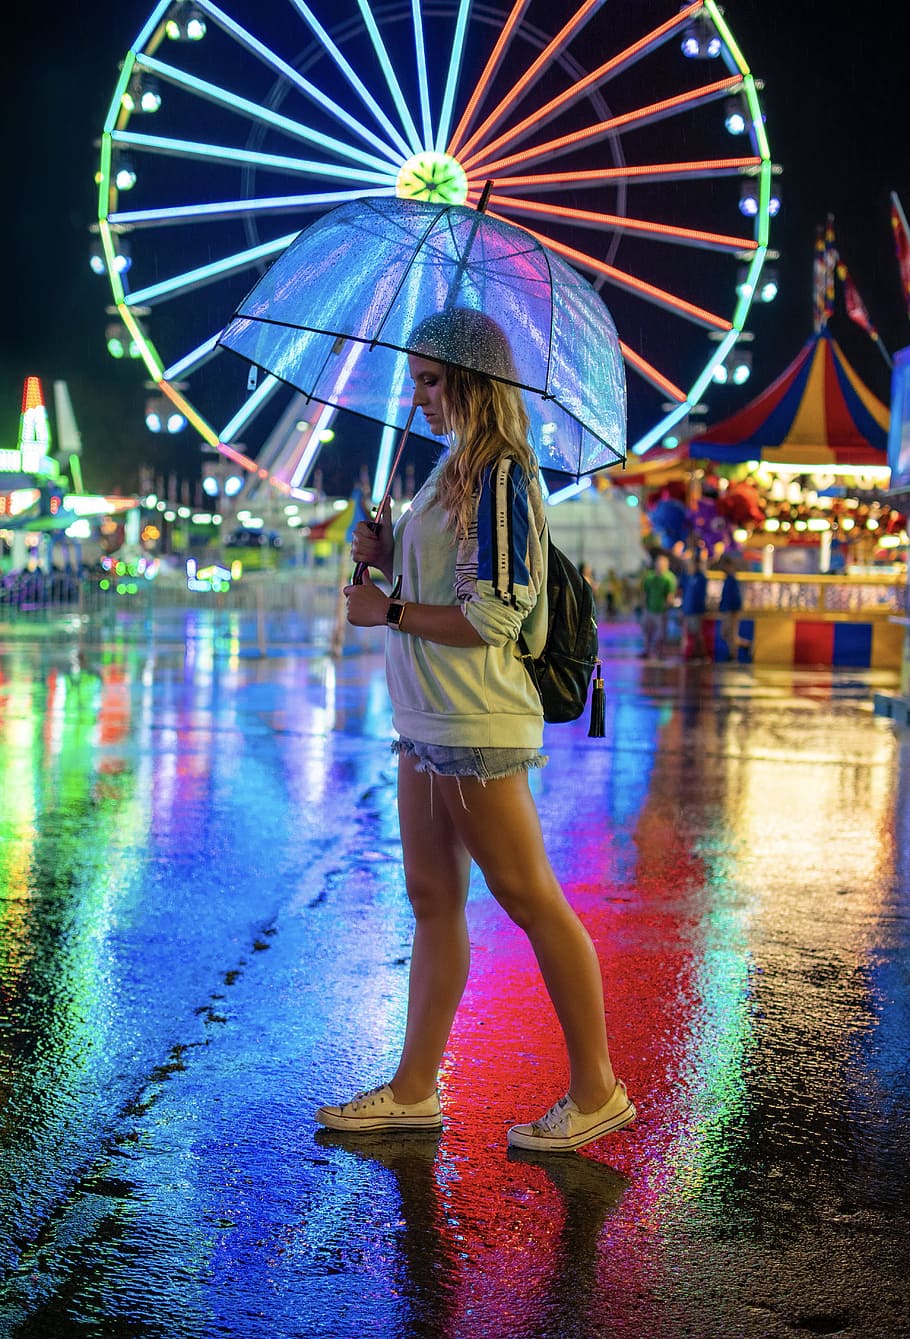 HD wallpaper: woman walking on pavement holding umbrella, carnival